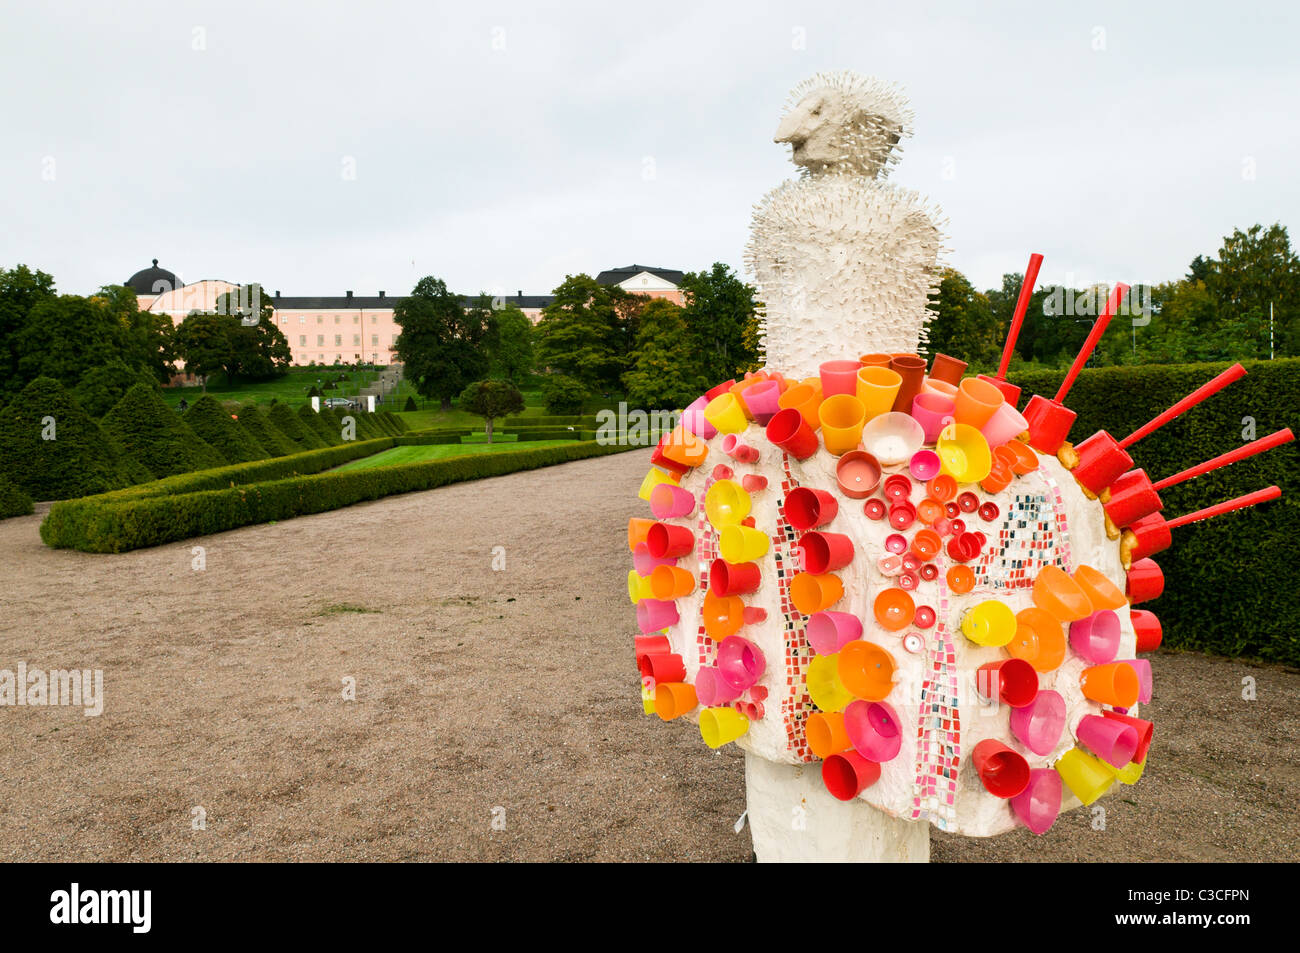 Bizarre sculpture in the Botanic Gardens and view of Uppsala Slott in Sweden. Stock Photo